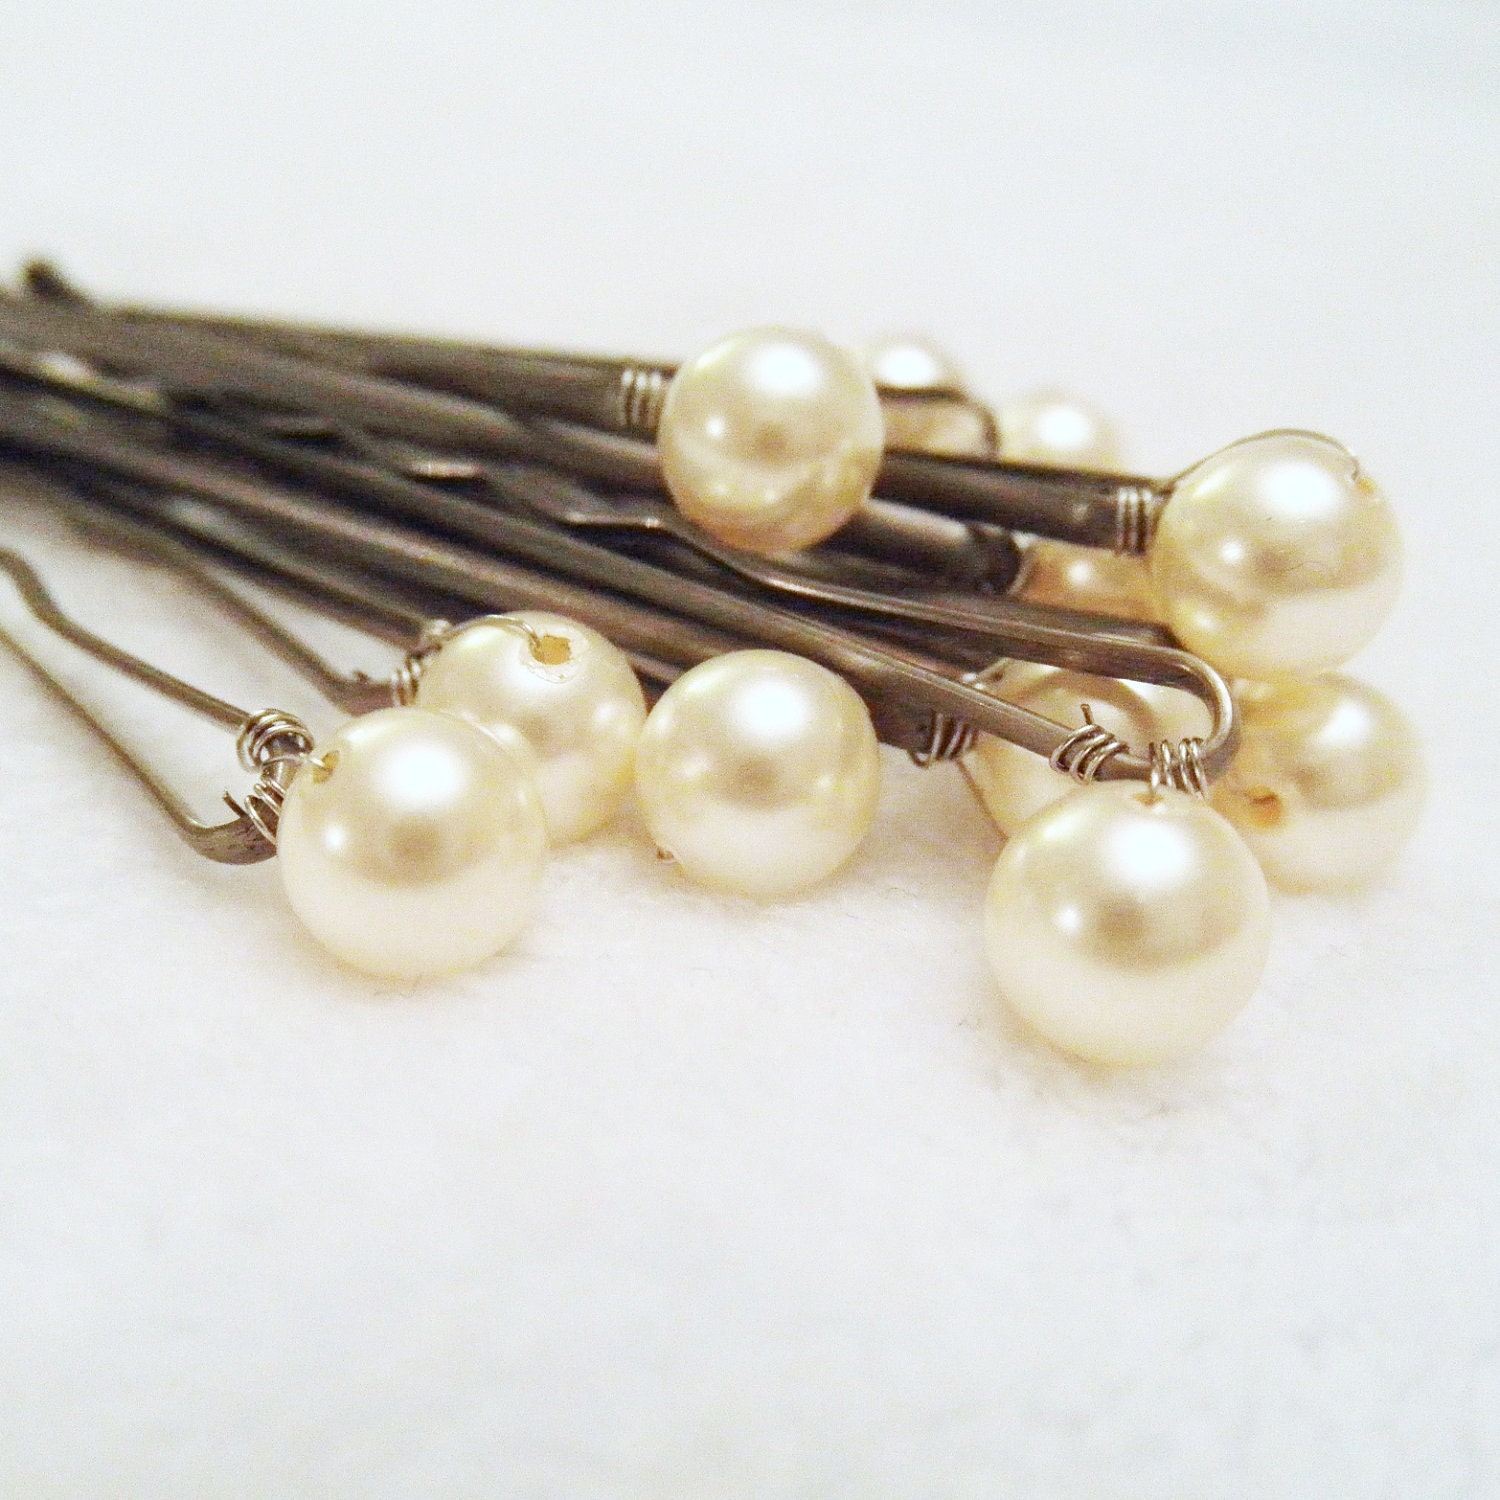 Pearl Hair Pins - 6 Cream OR Ivory wedding bobby pins